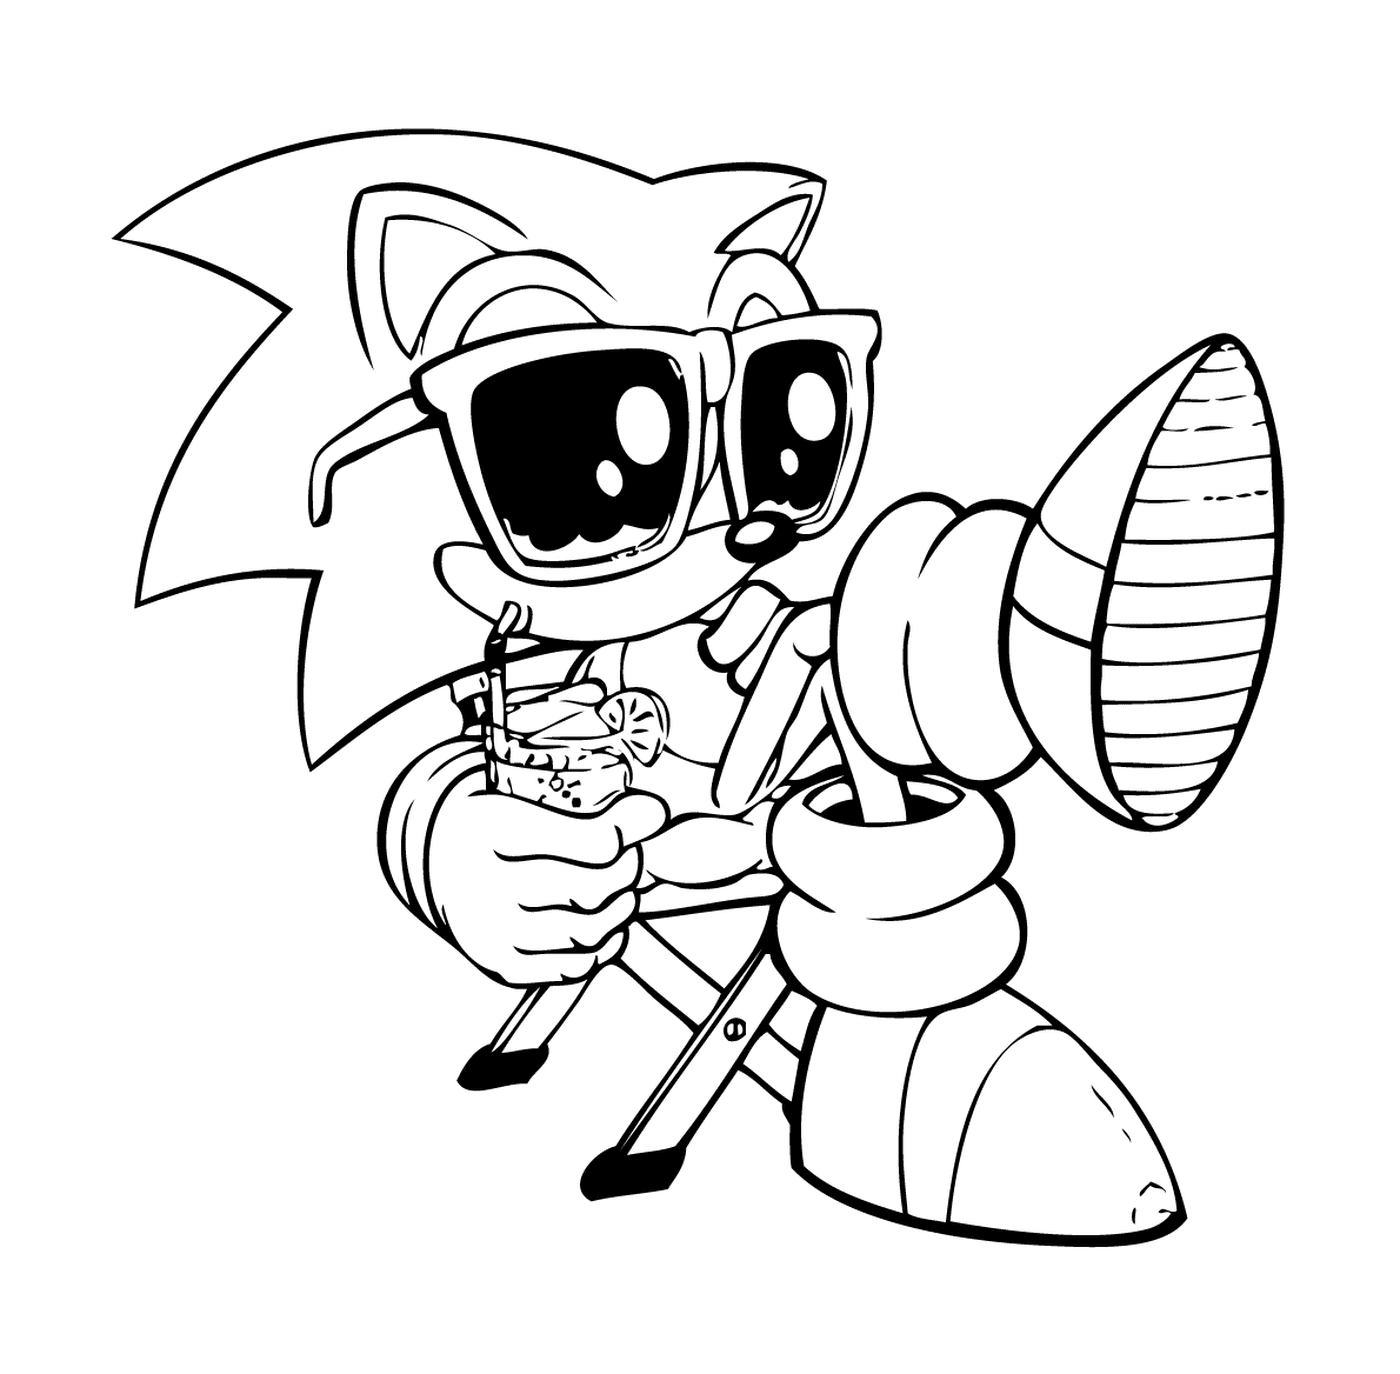  Agile e vivace Sonic 